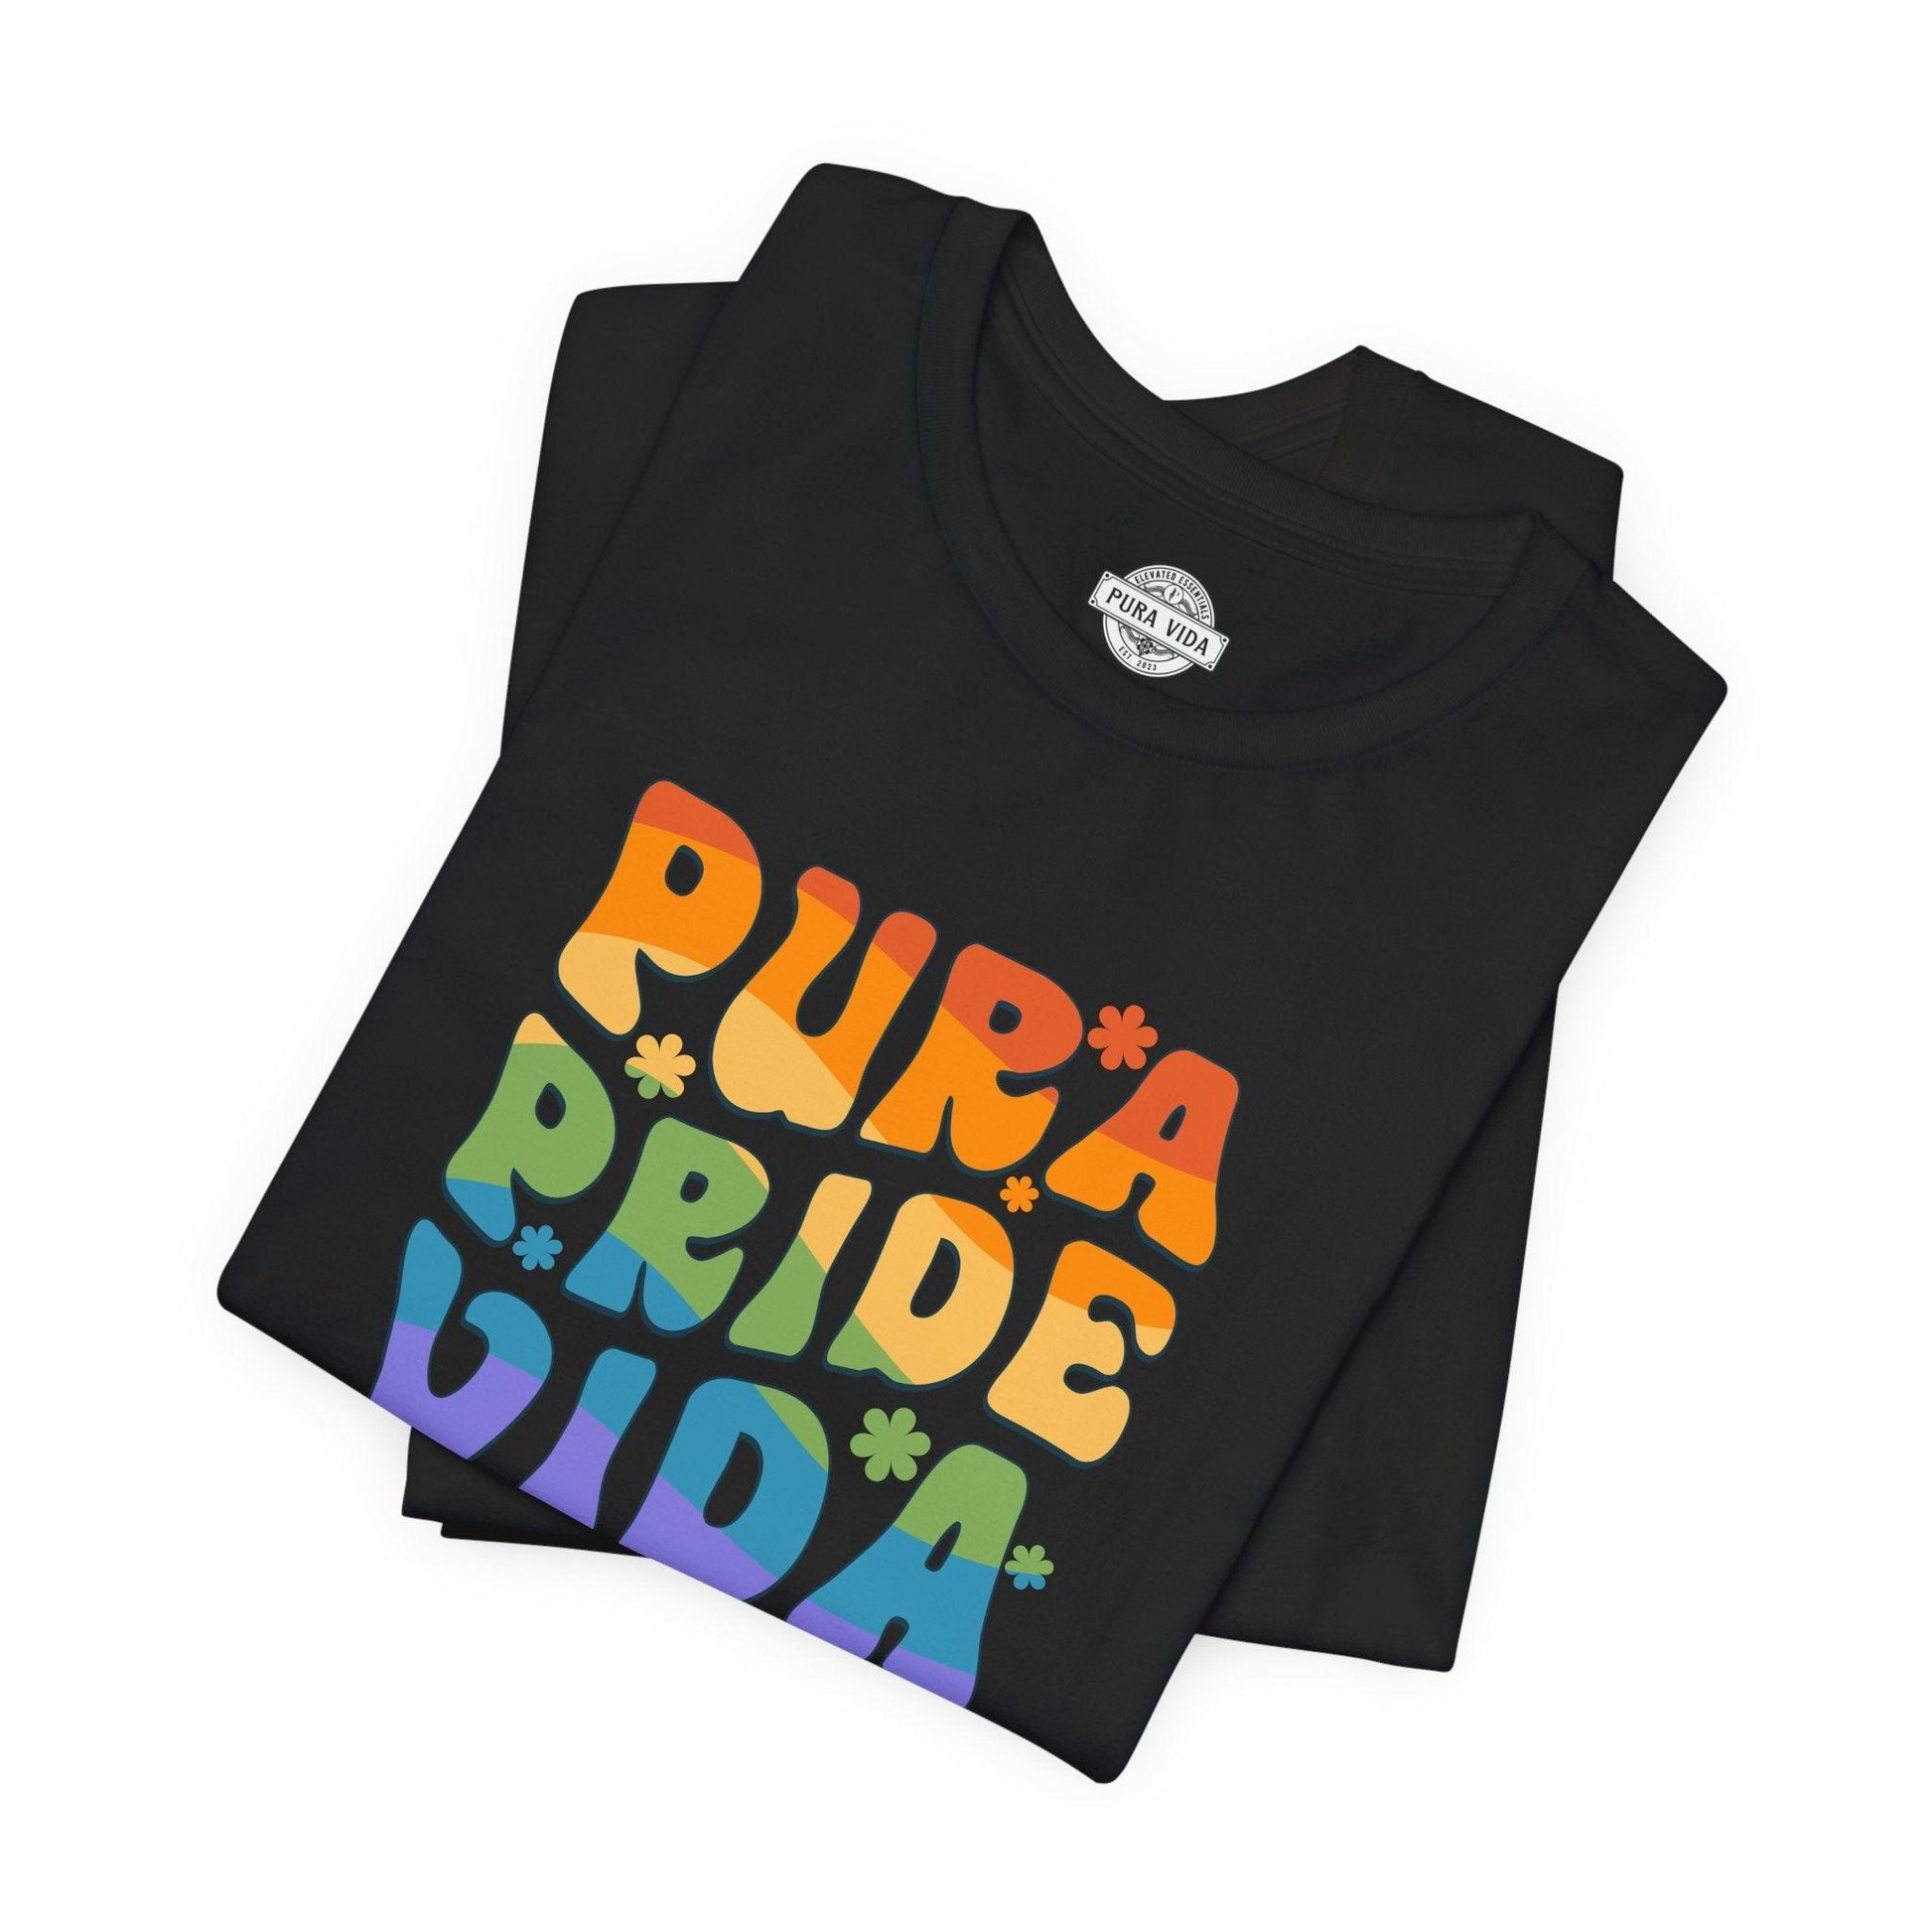 Groovy Pura Pride Vida - Short Sleeve tee - The Pura Vida Co.